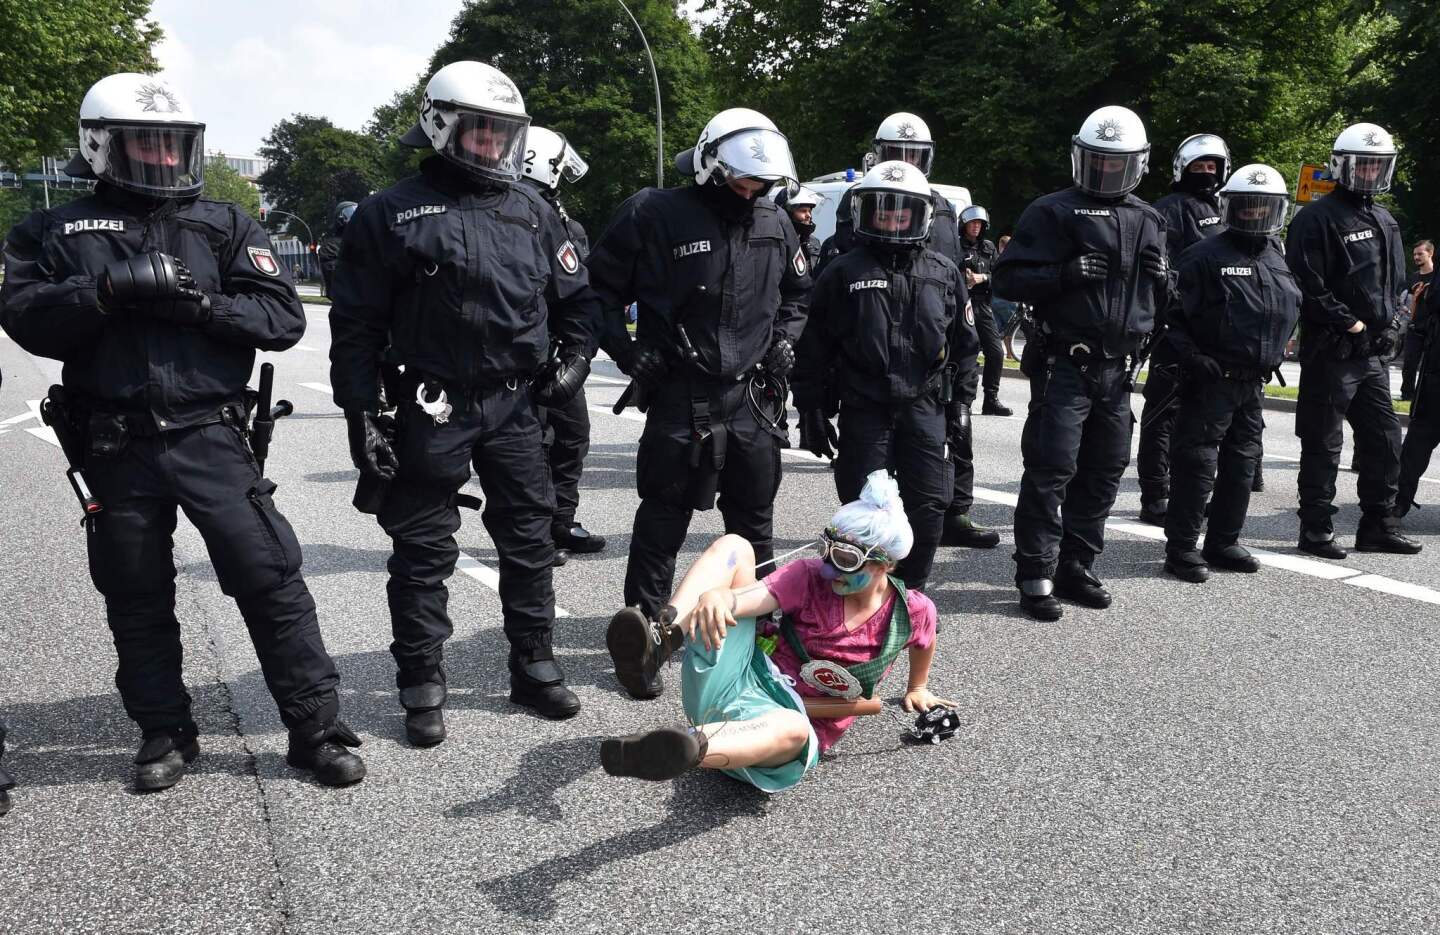 Protests at G20 Summit